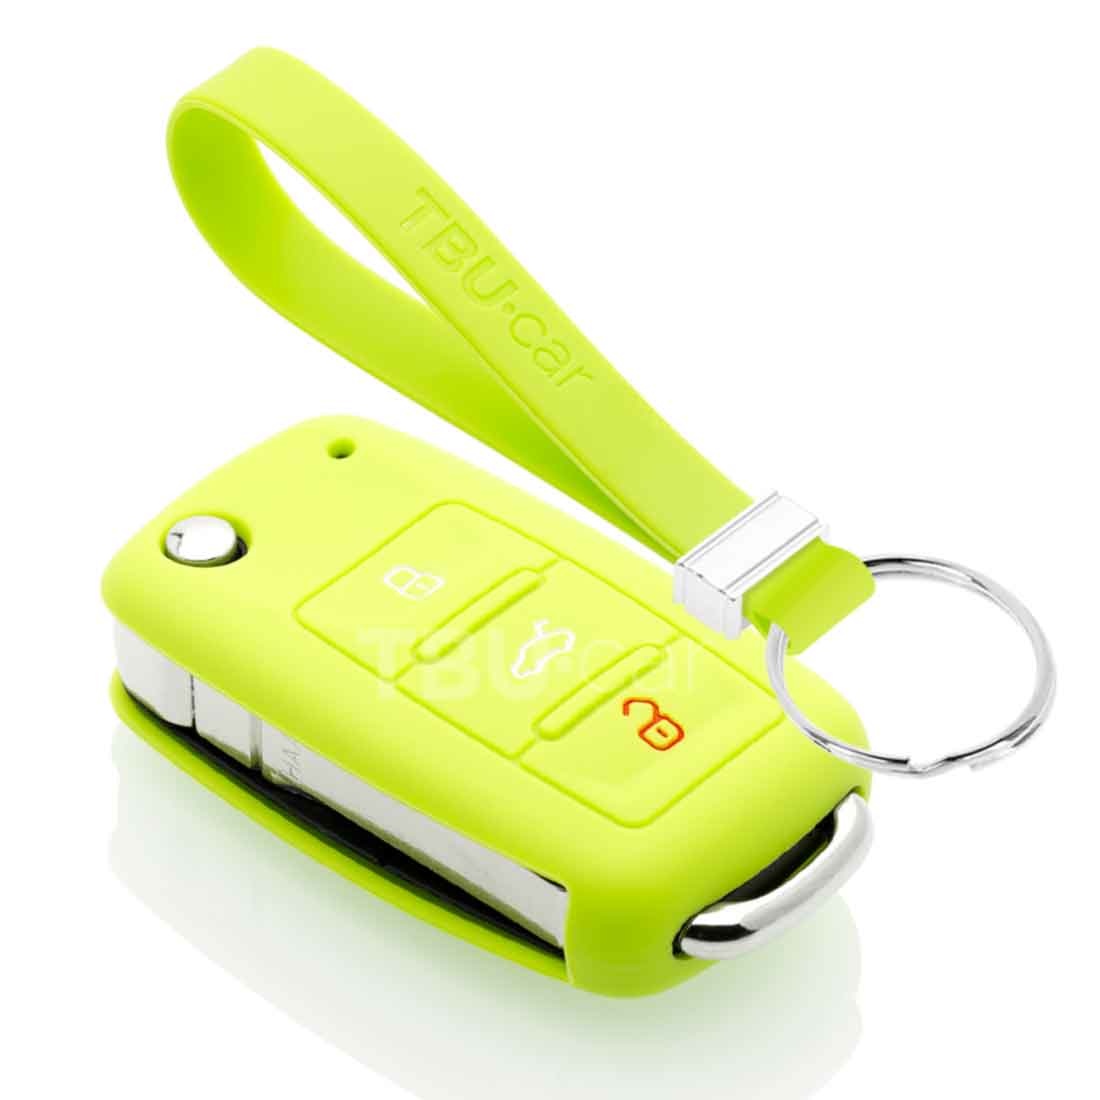 TBU car TBU car Autoschlüssel Hülle kompatibel mit Seat 3 Tasten - Schutzhülle aus Silikon - Auto Schlüsselhülle Cover in Lindgrün